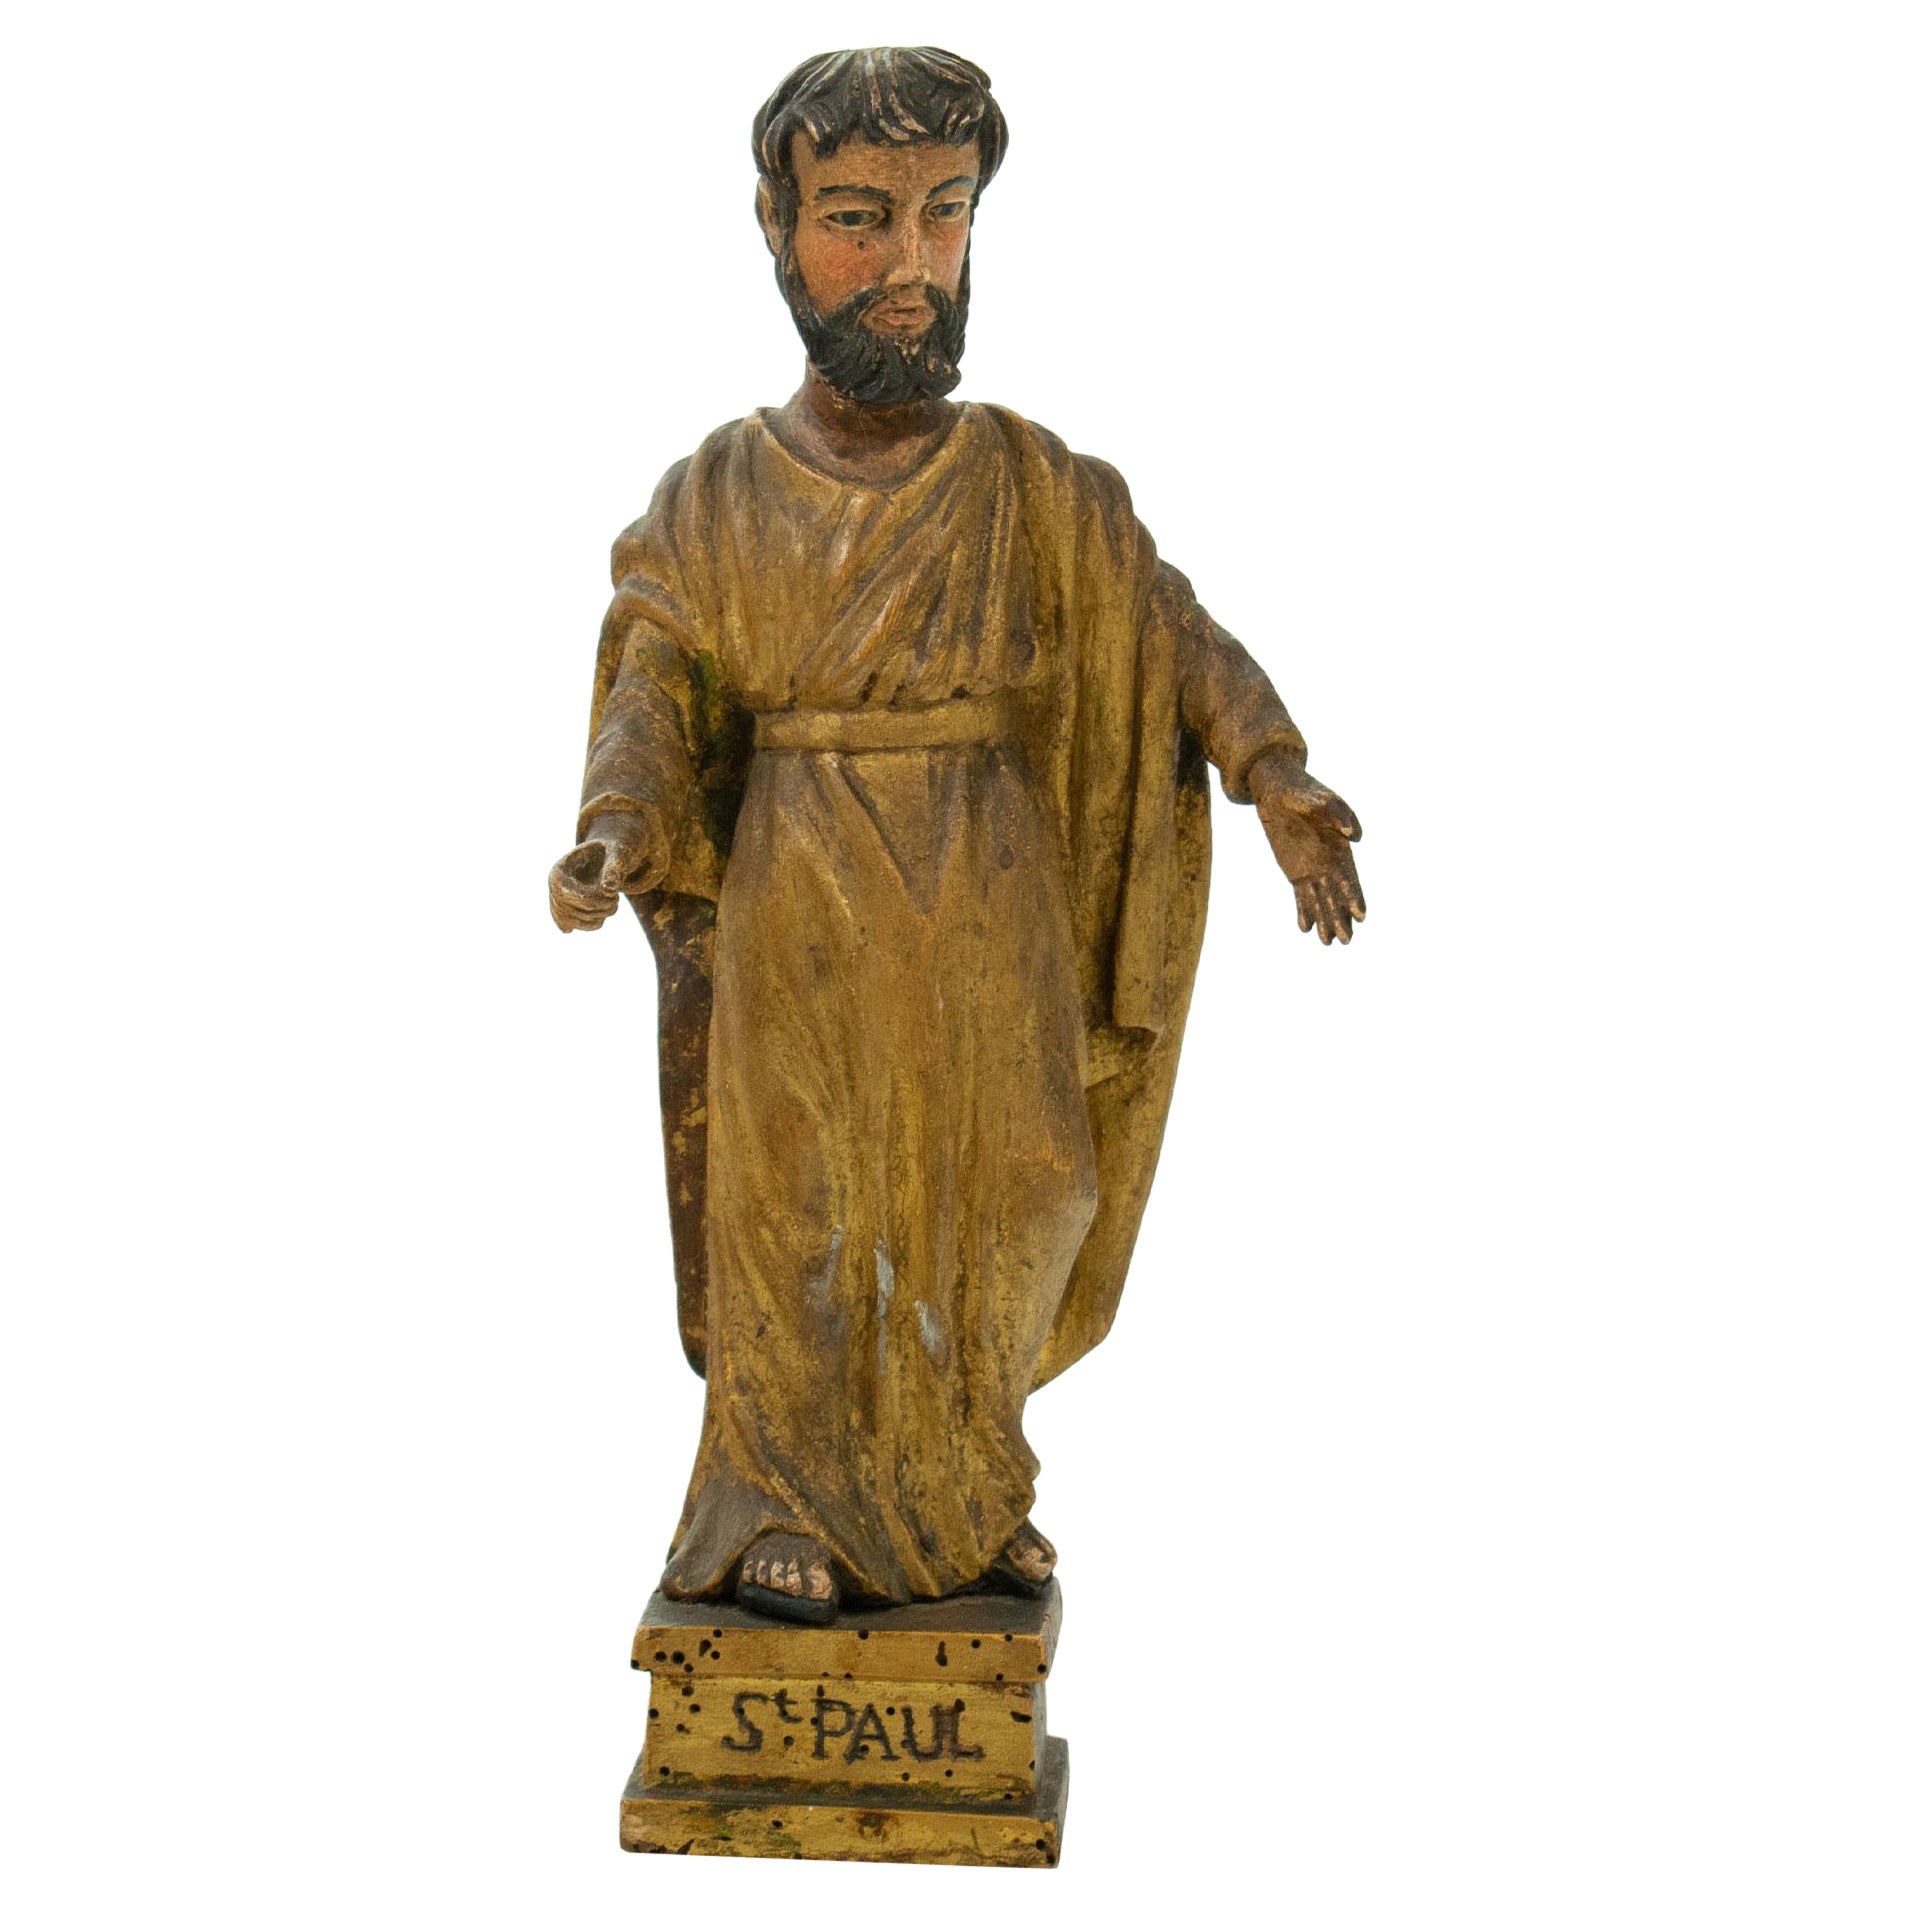 SAINT PAUL: Statuette aus geschnitztem und vergoldetem polychromem Holz, spätes 18. Jahrhundert